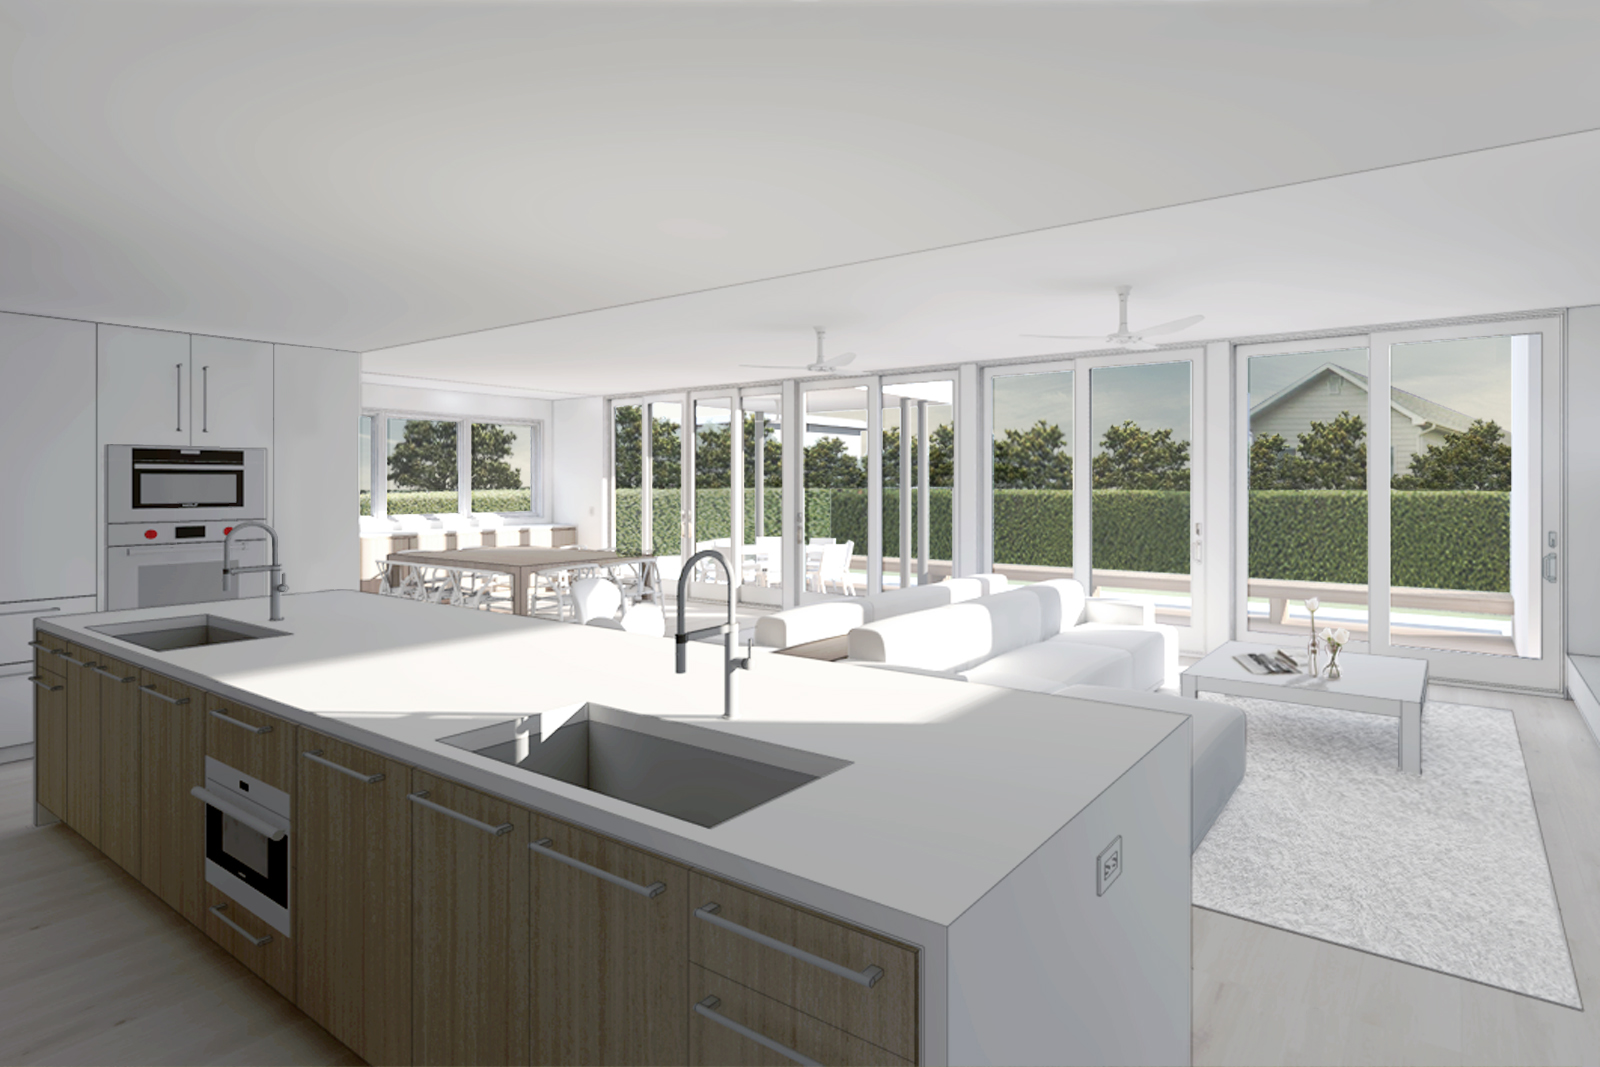 04-res4-resolution-4-architecture-modern-modular-prefab-long-beach-house-interior-kitchen-dining-living-rendering.jpg